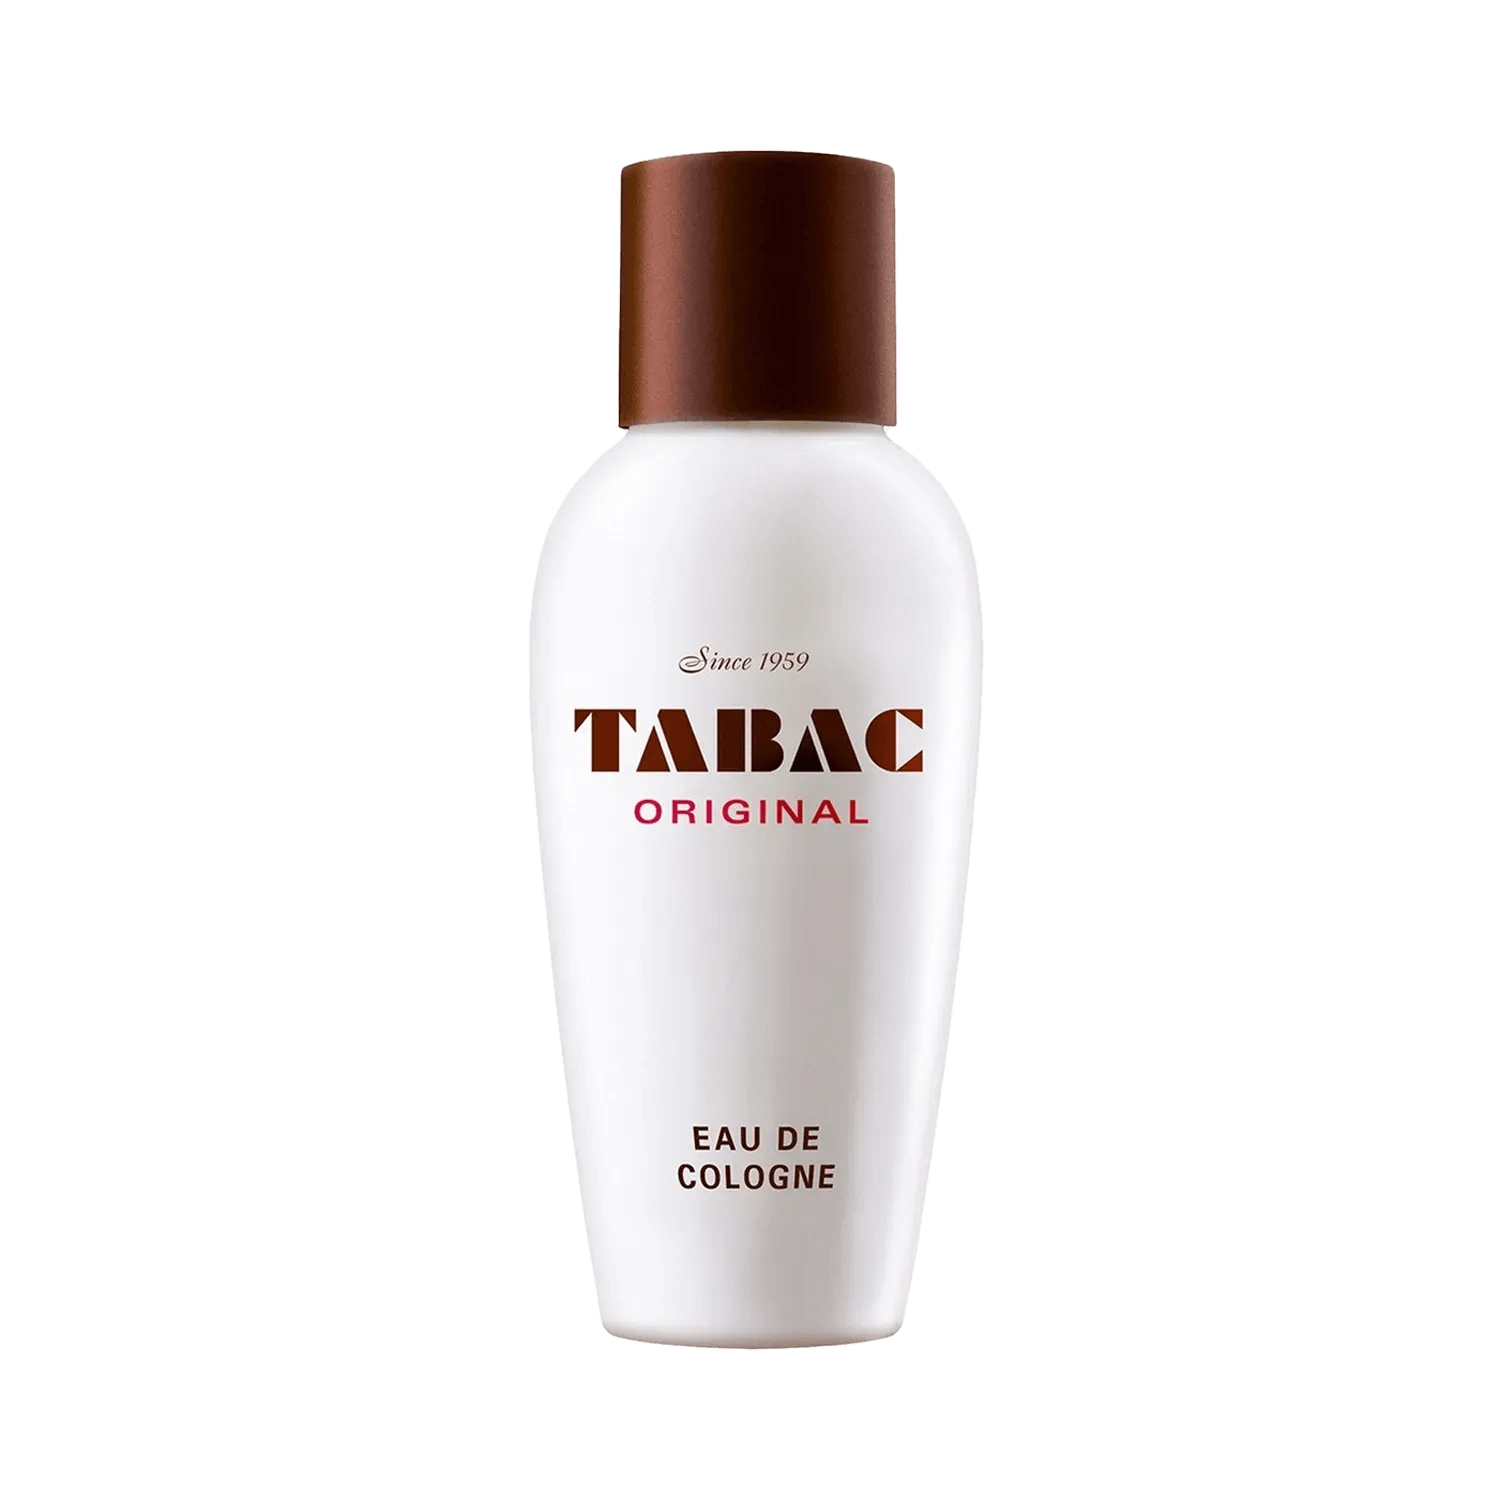 Tabac | Tabac Original Eau de Cologne (300ml)